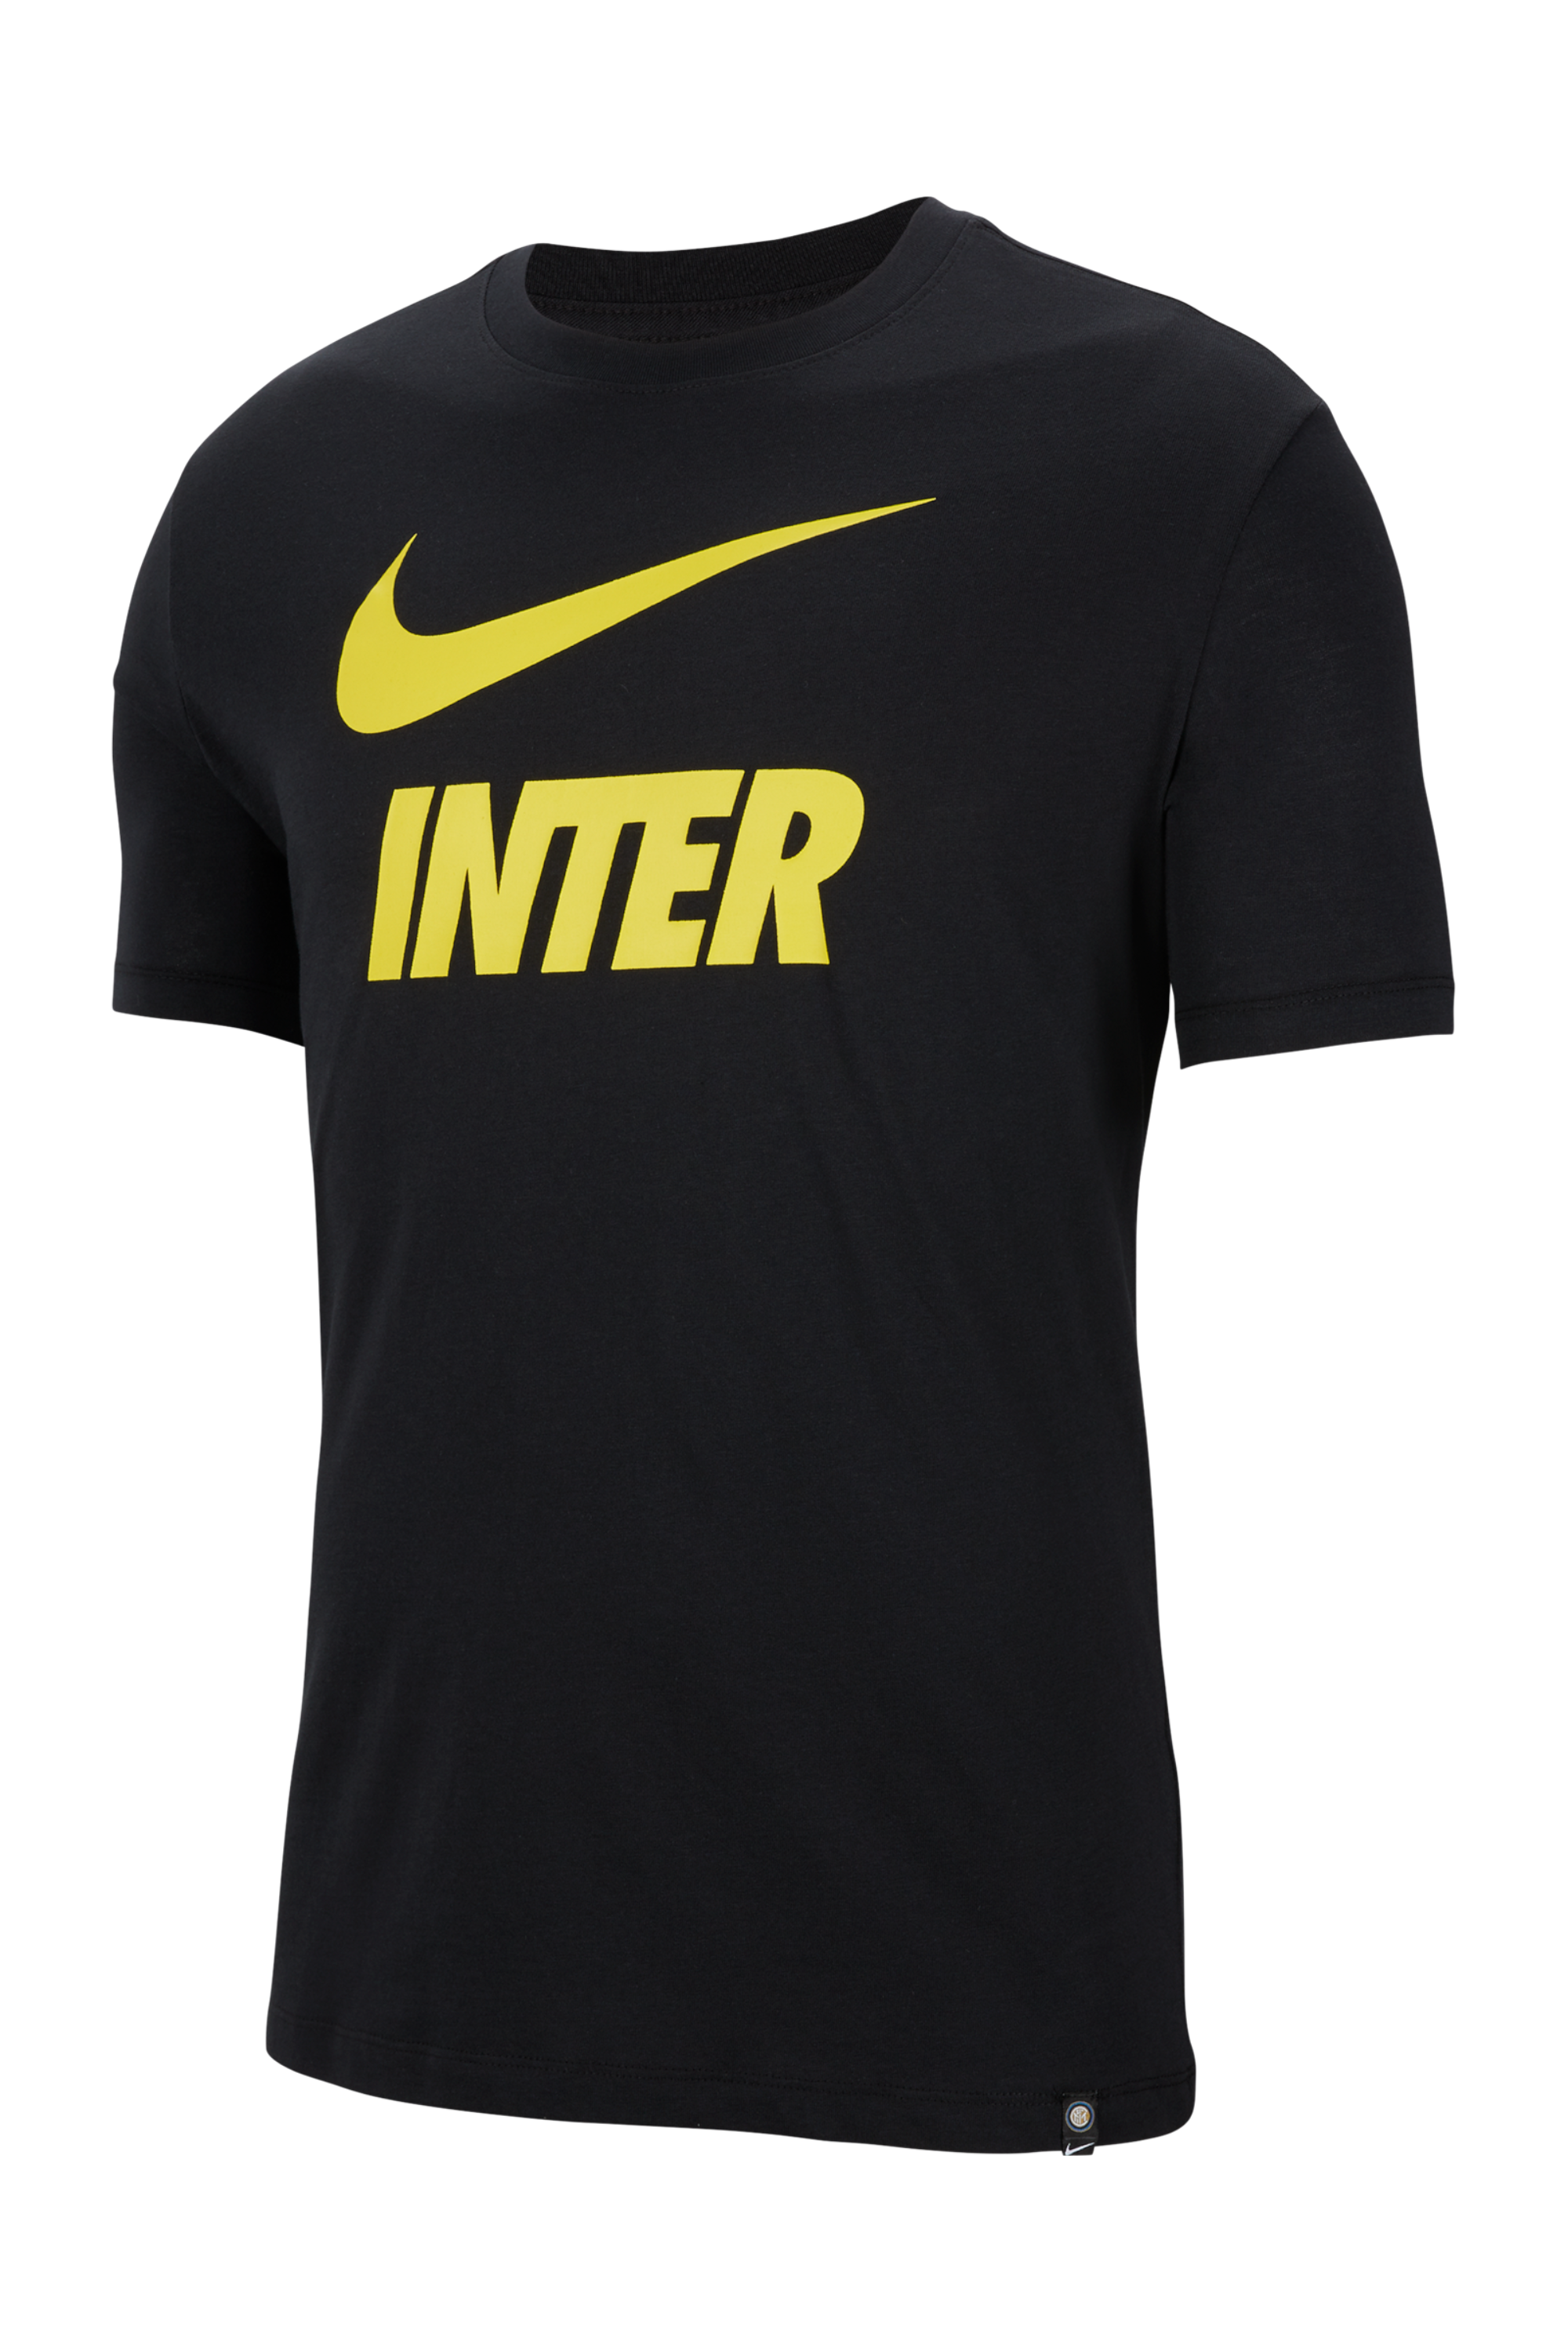 Inter t. Nike Milano. Nike Inter футболка. Nike Inter Milan футболка. Желтая футболка Интера.